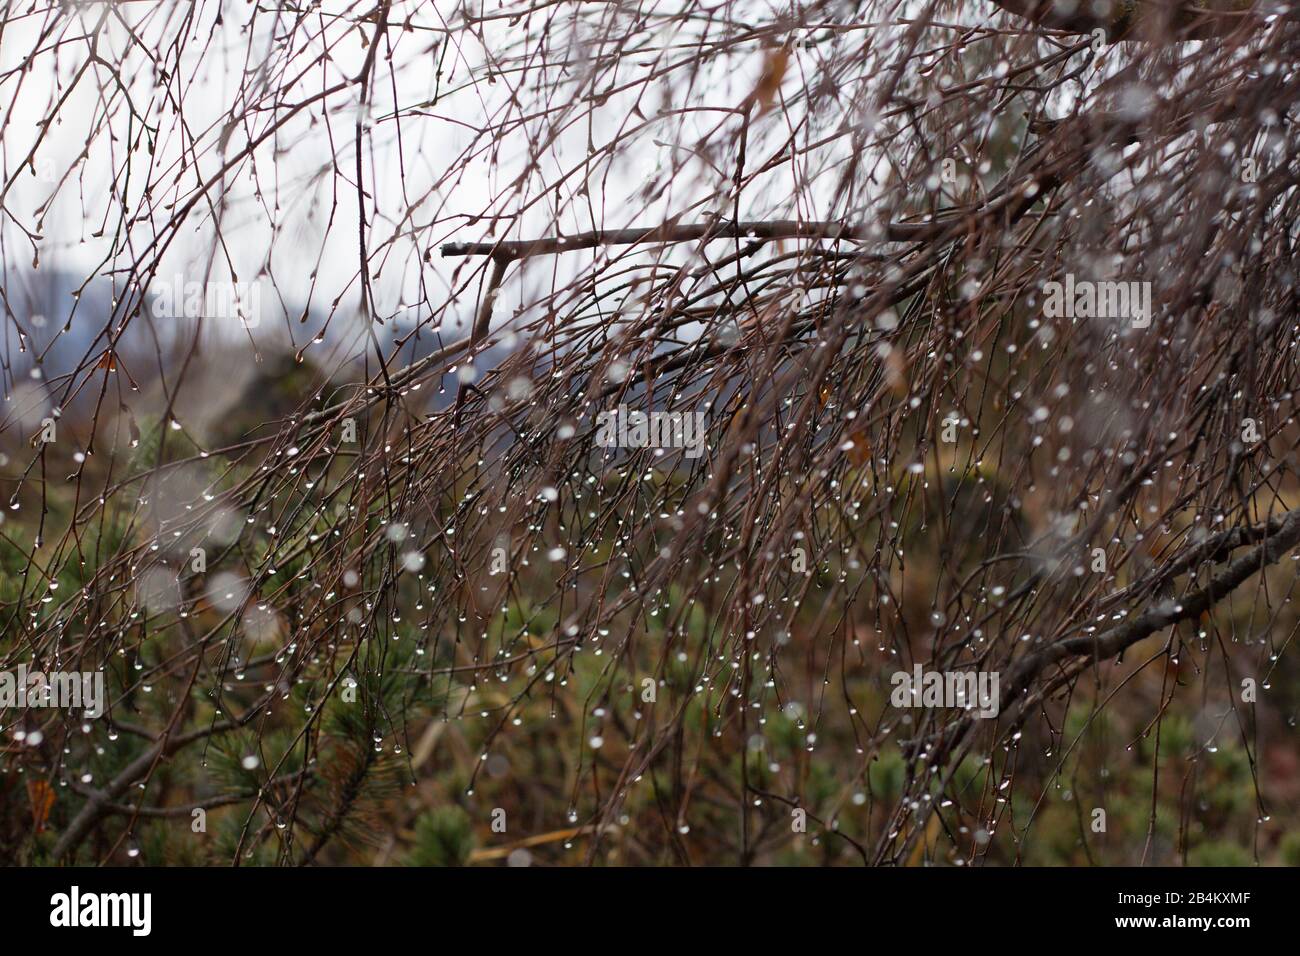 Raindrops on thin branches Stock Photo